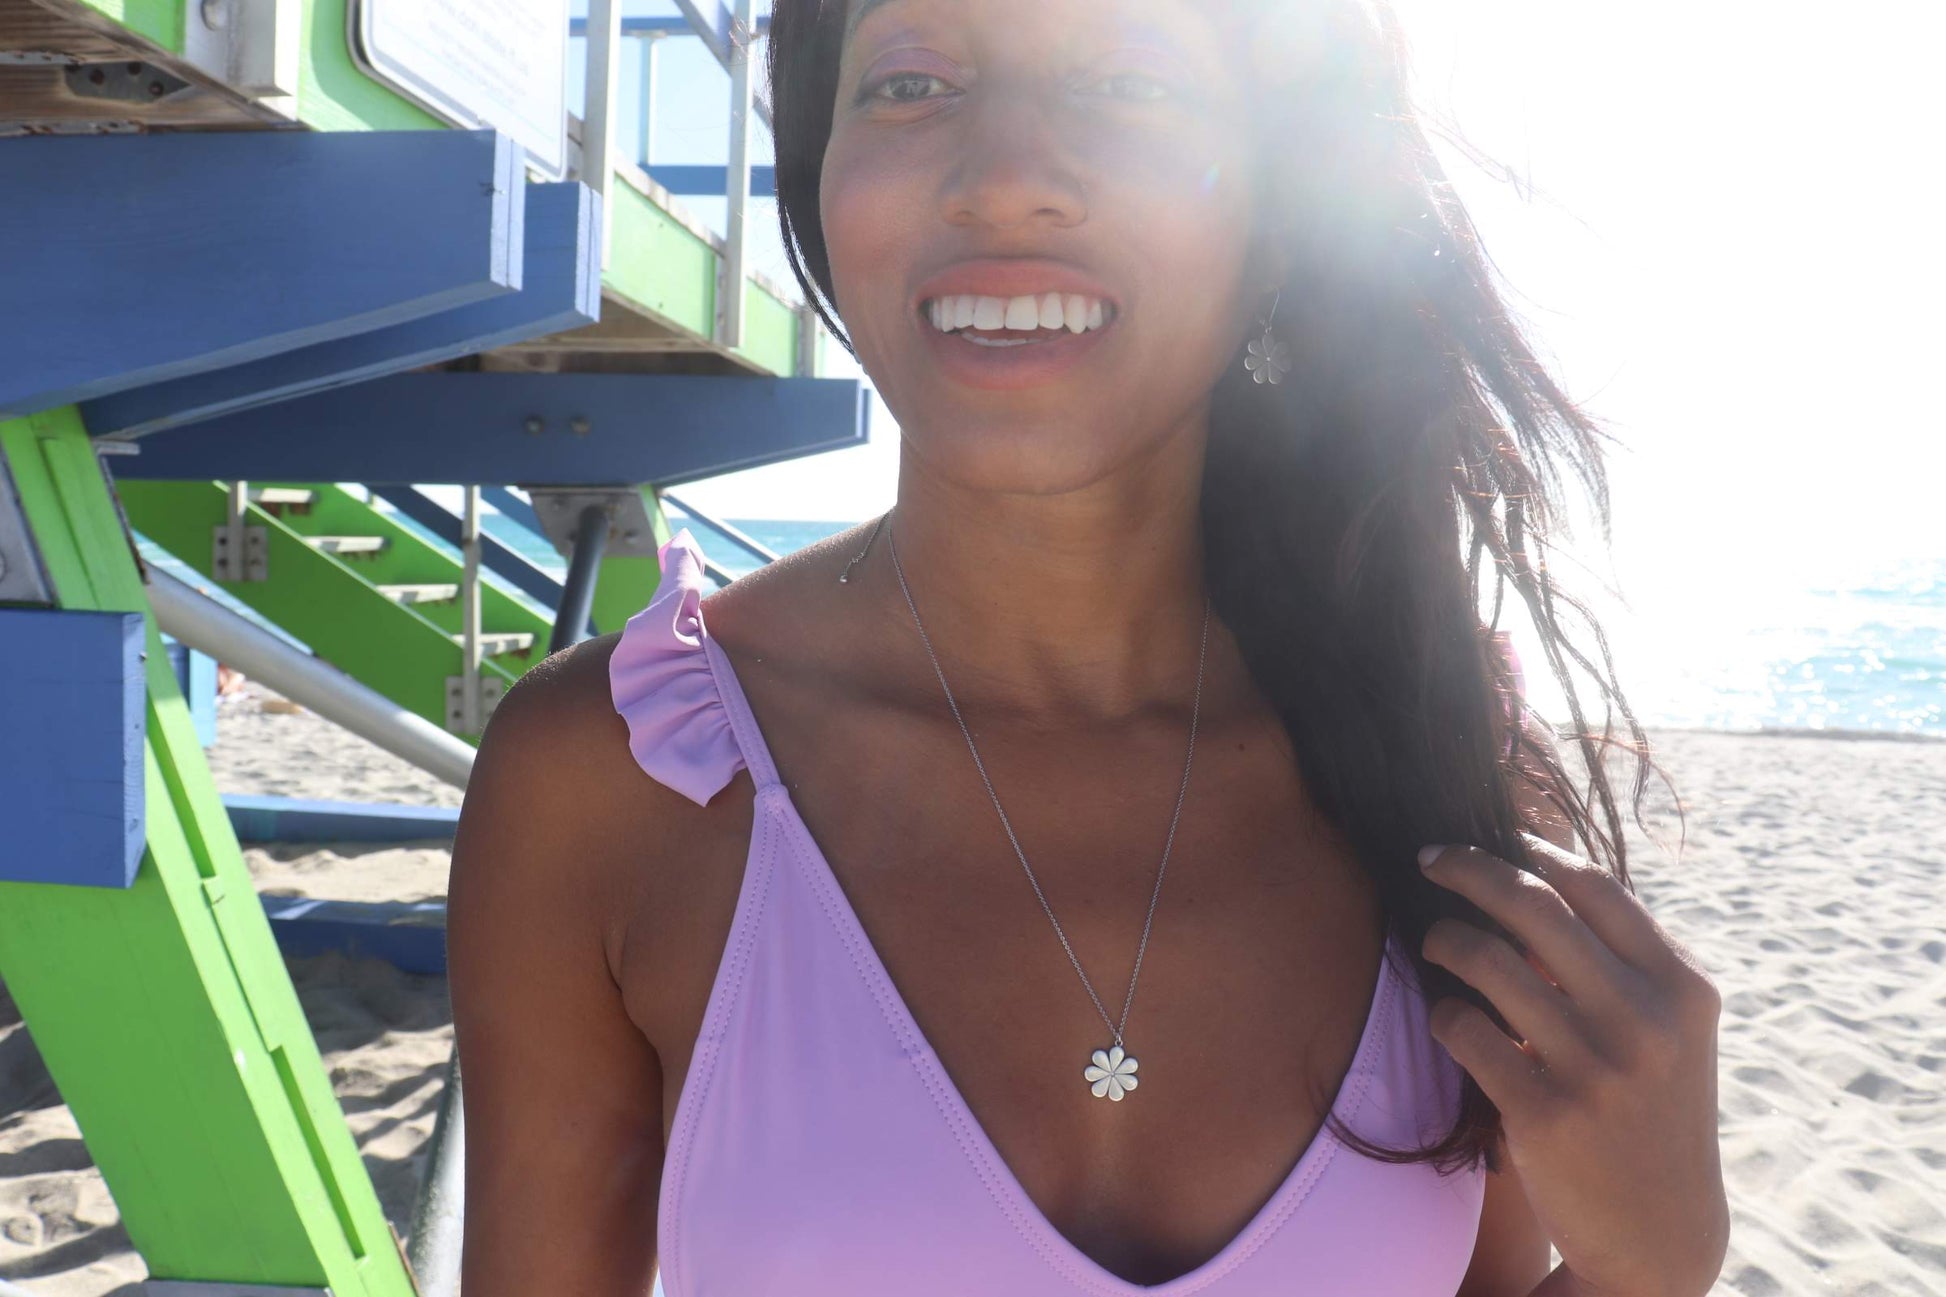 woman smiling on beach in a purple bikini wearing flower earrings and matching pendant